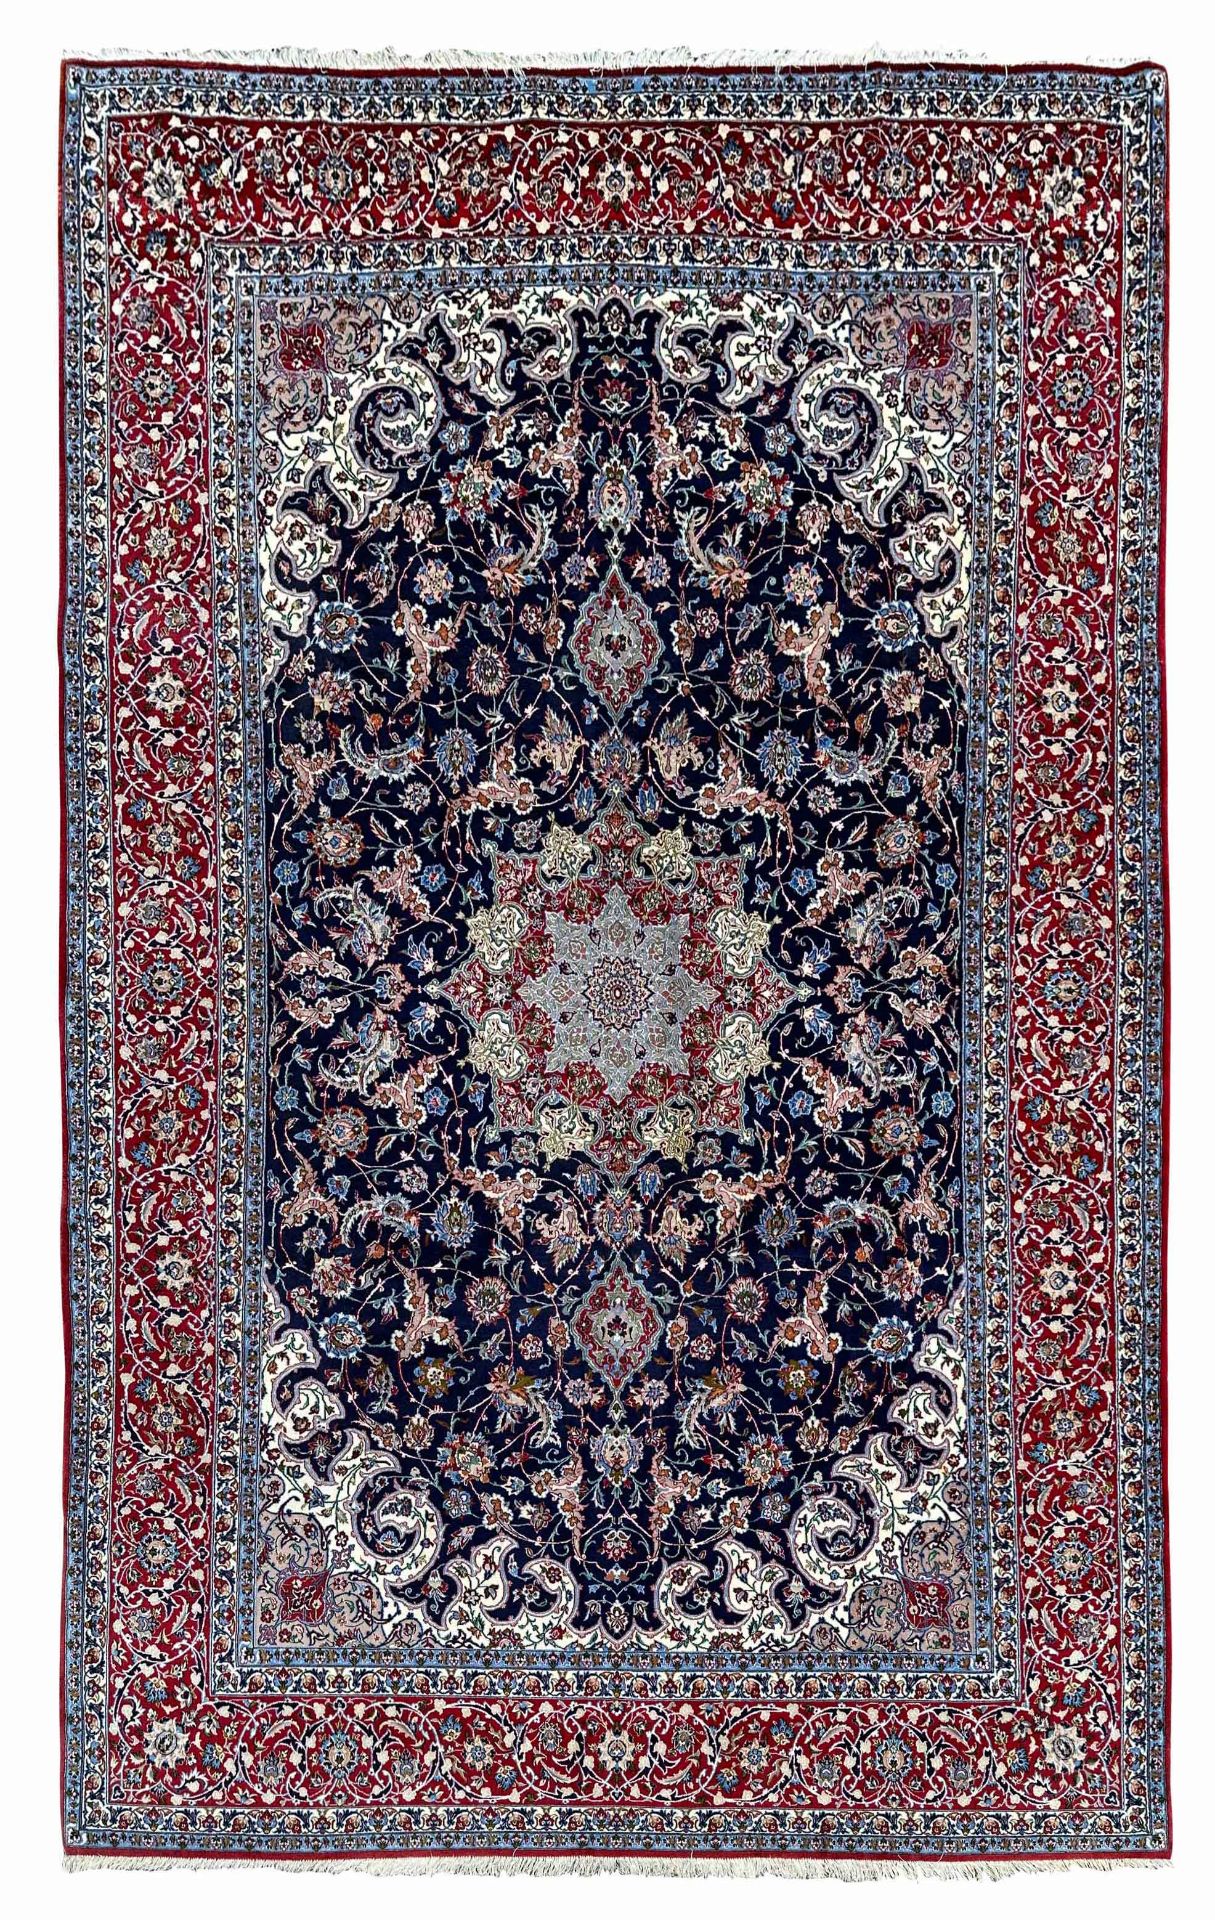 Isfahan. Oriental carpet. 20th century.